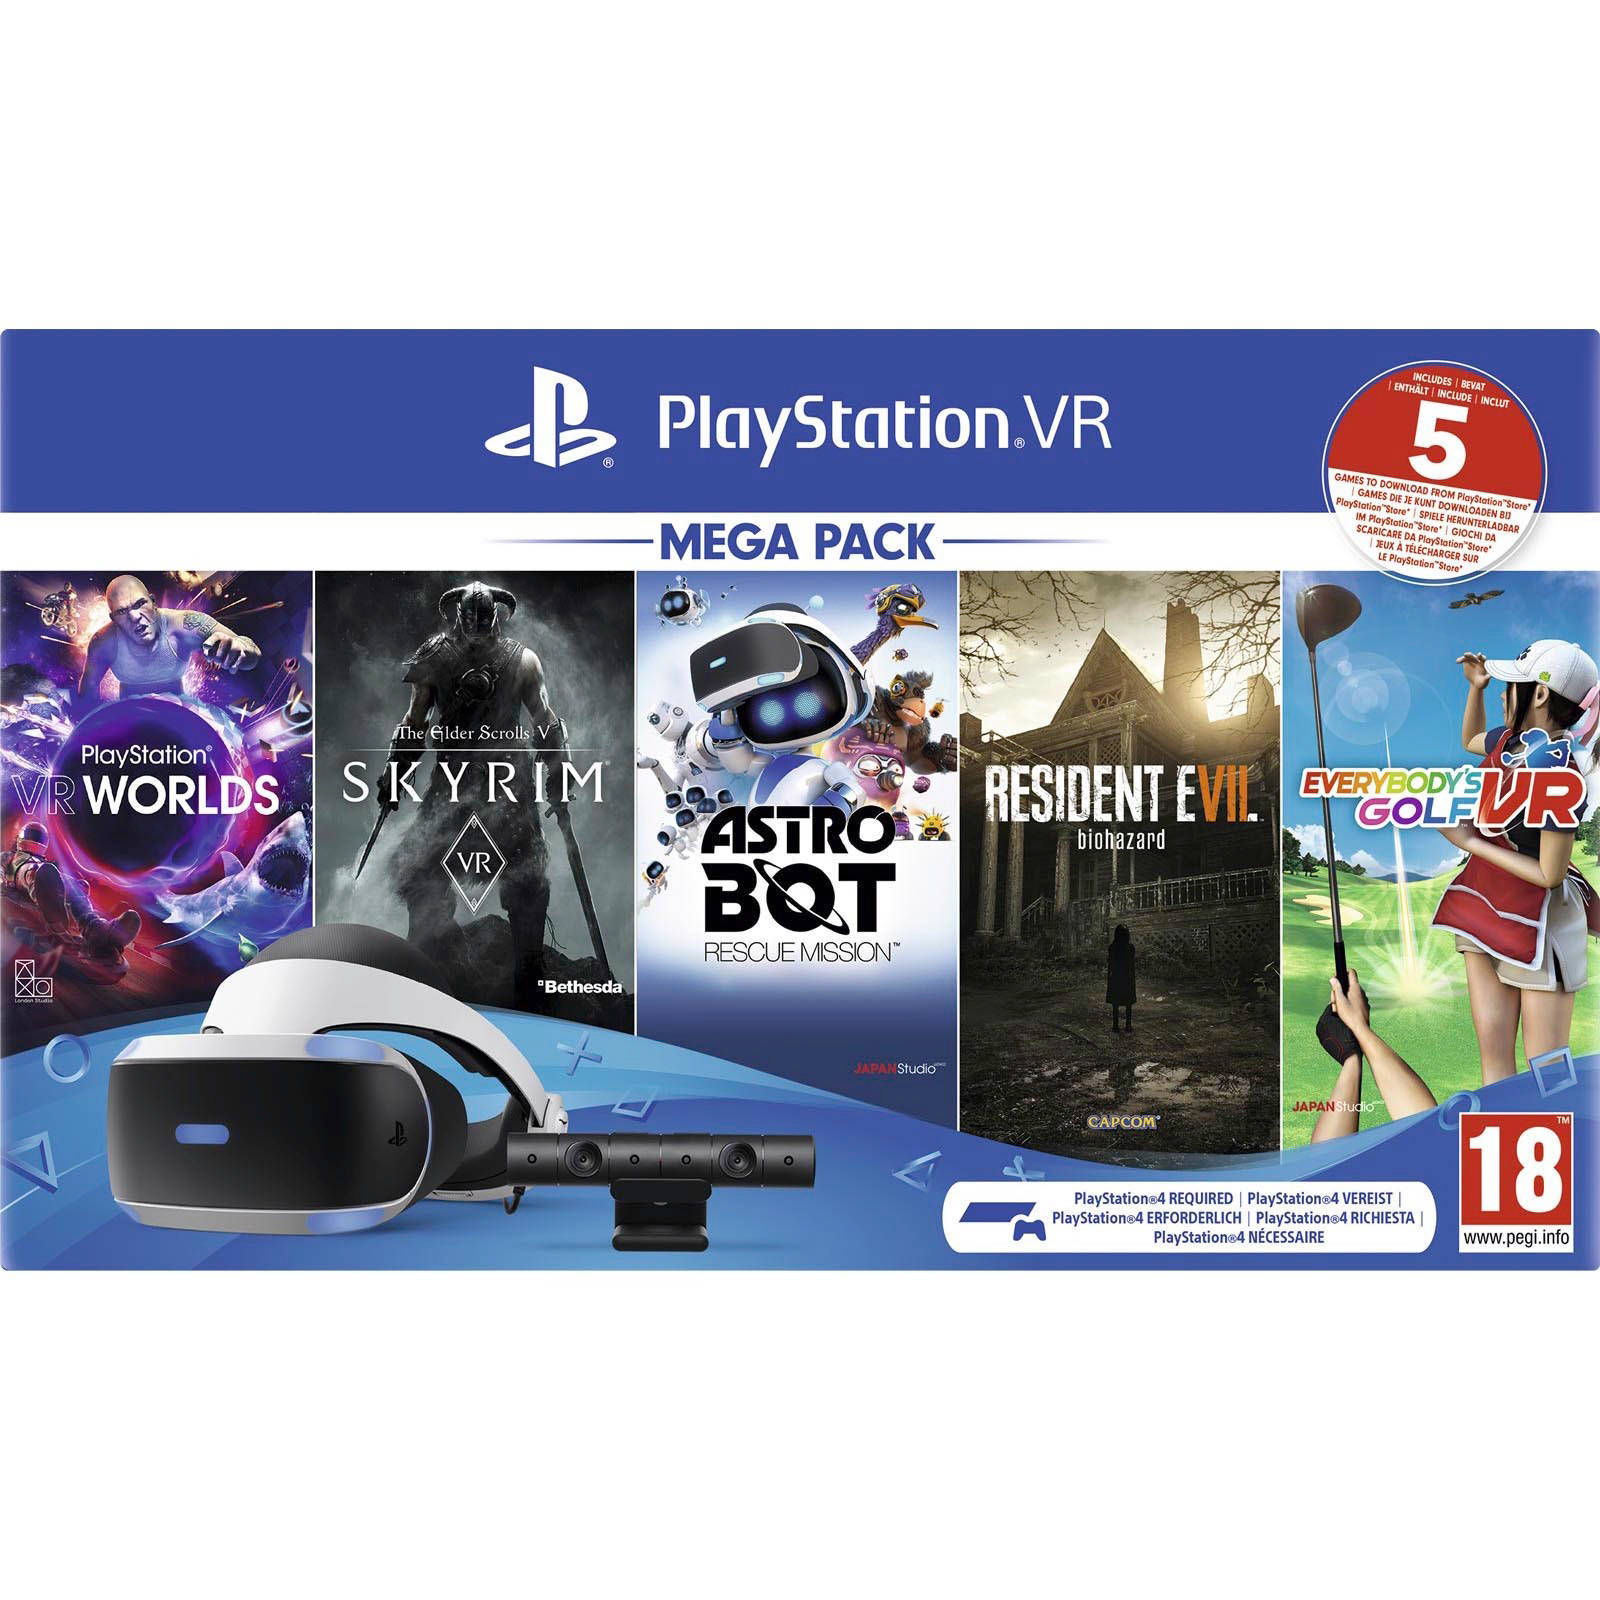 【新品未開封】PlayStation VR MEGA PACK対象年齢12歳以上